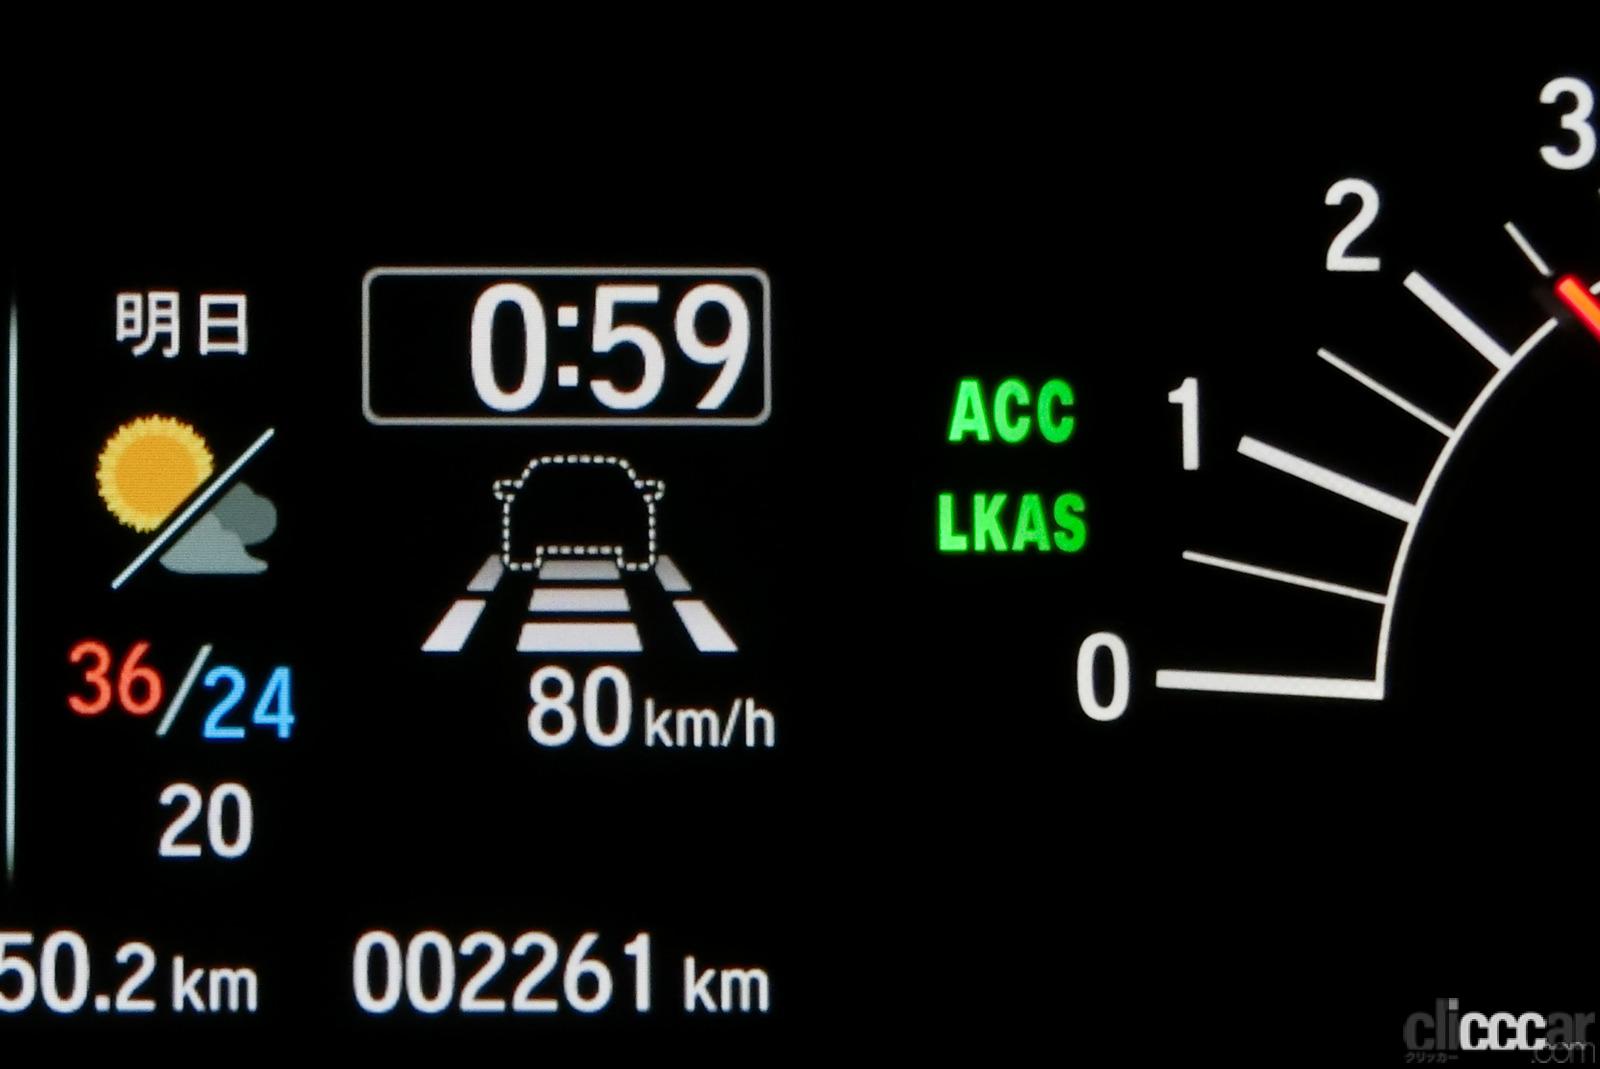 Acc 3 At Stop 画像 最新ホンダn Boxのホンダセンシング Accが渋滞追従機能付きに進化してどう変わった 新車リアル試乗3 2 ホンダn Box Honda Sensing編 Clicccar Com